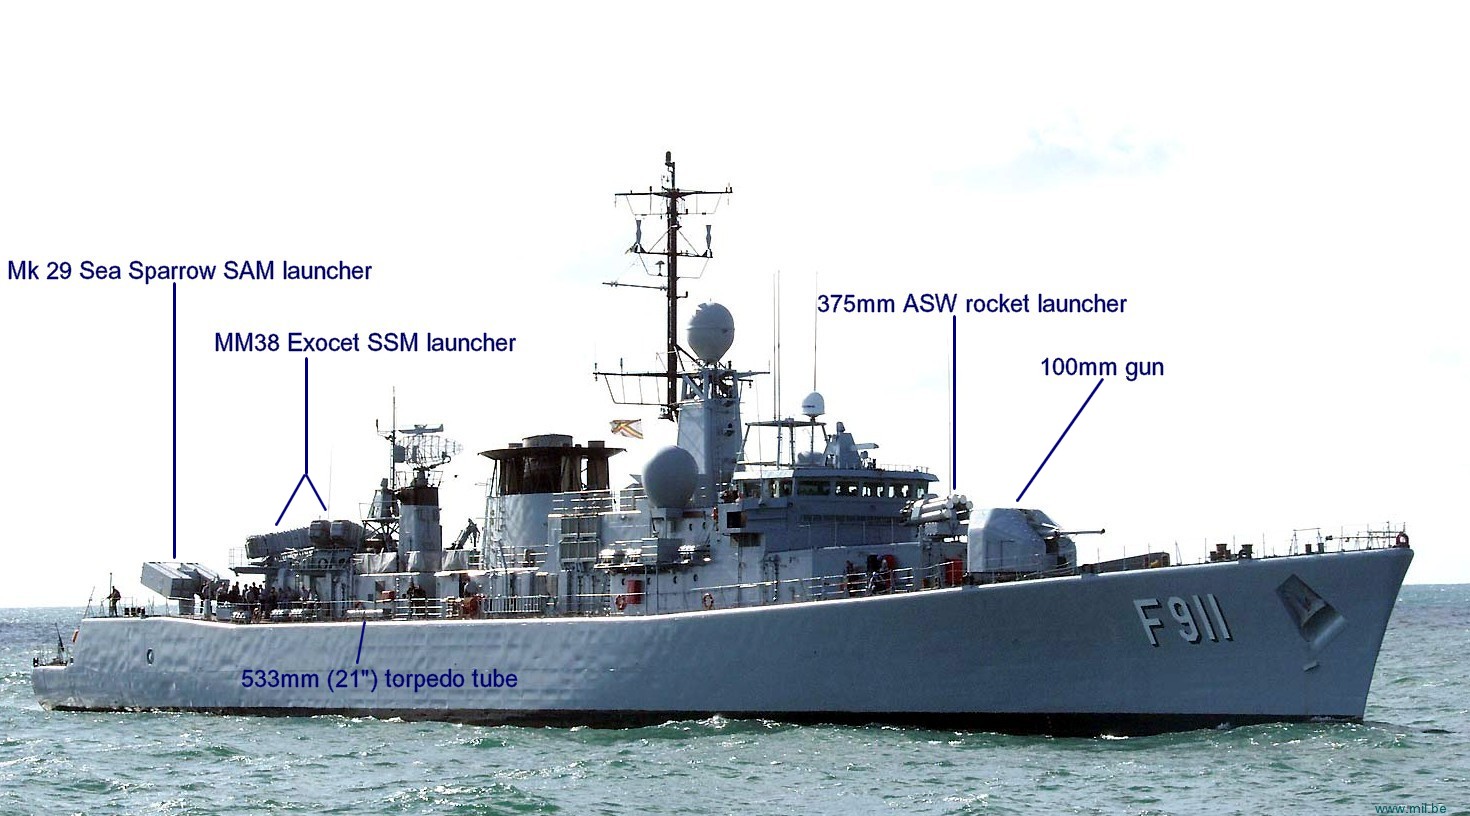 wielingen class frigate belgian navy armed forces mk-29 rim-7 sea sparrow sam launcher mm38 exocet ssm missile asw rocket giat 100mm gun 02